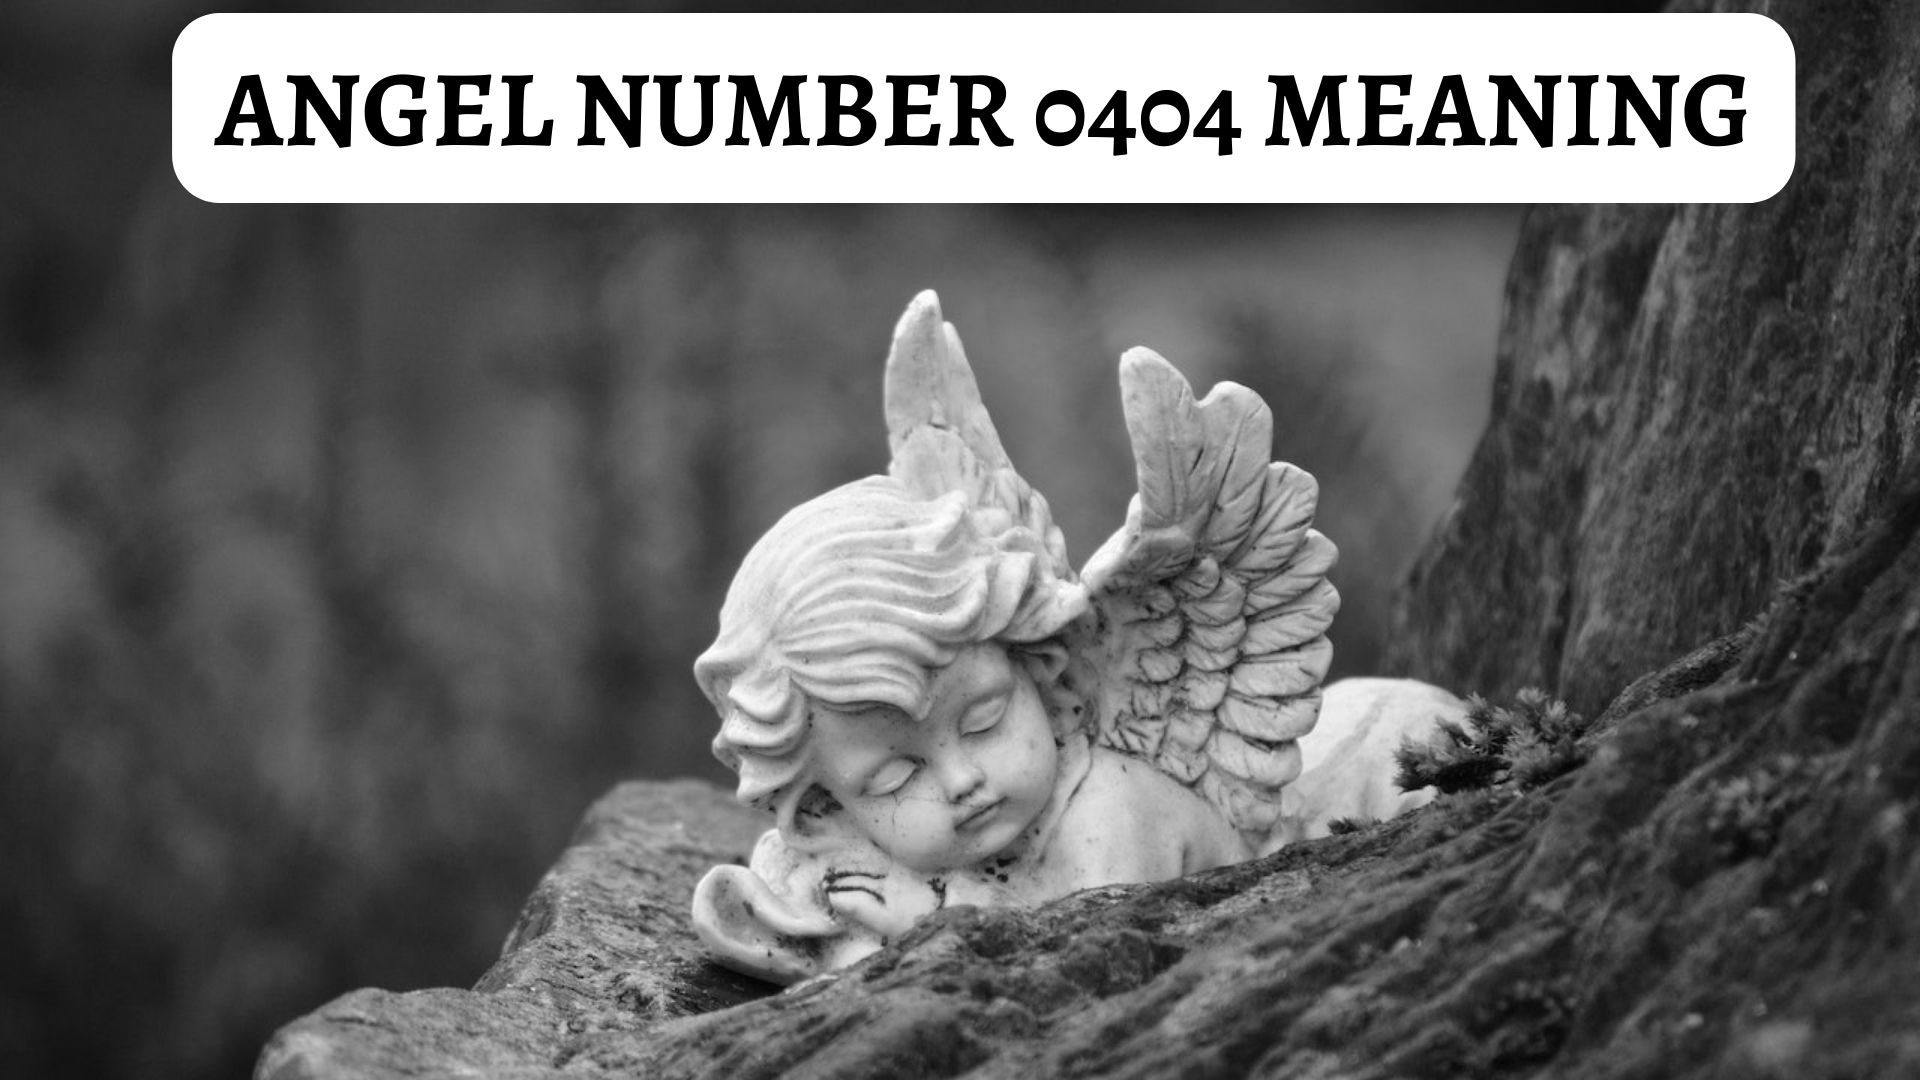 Angel Number 0404 Meaning - Symbolism And Spiritual Interpretation